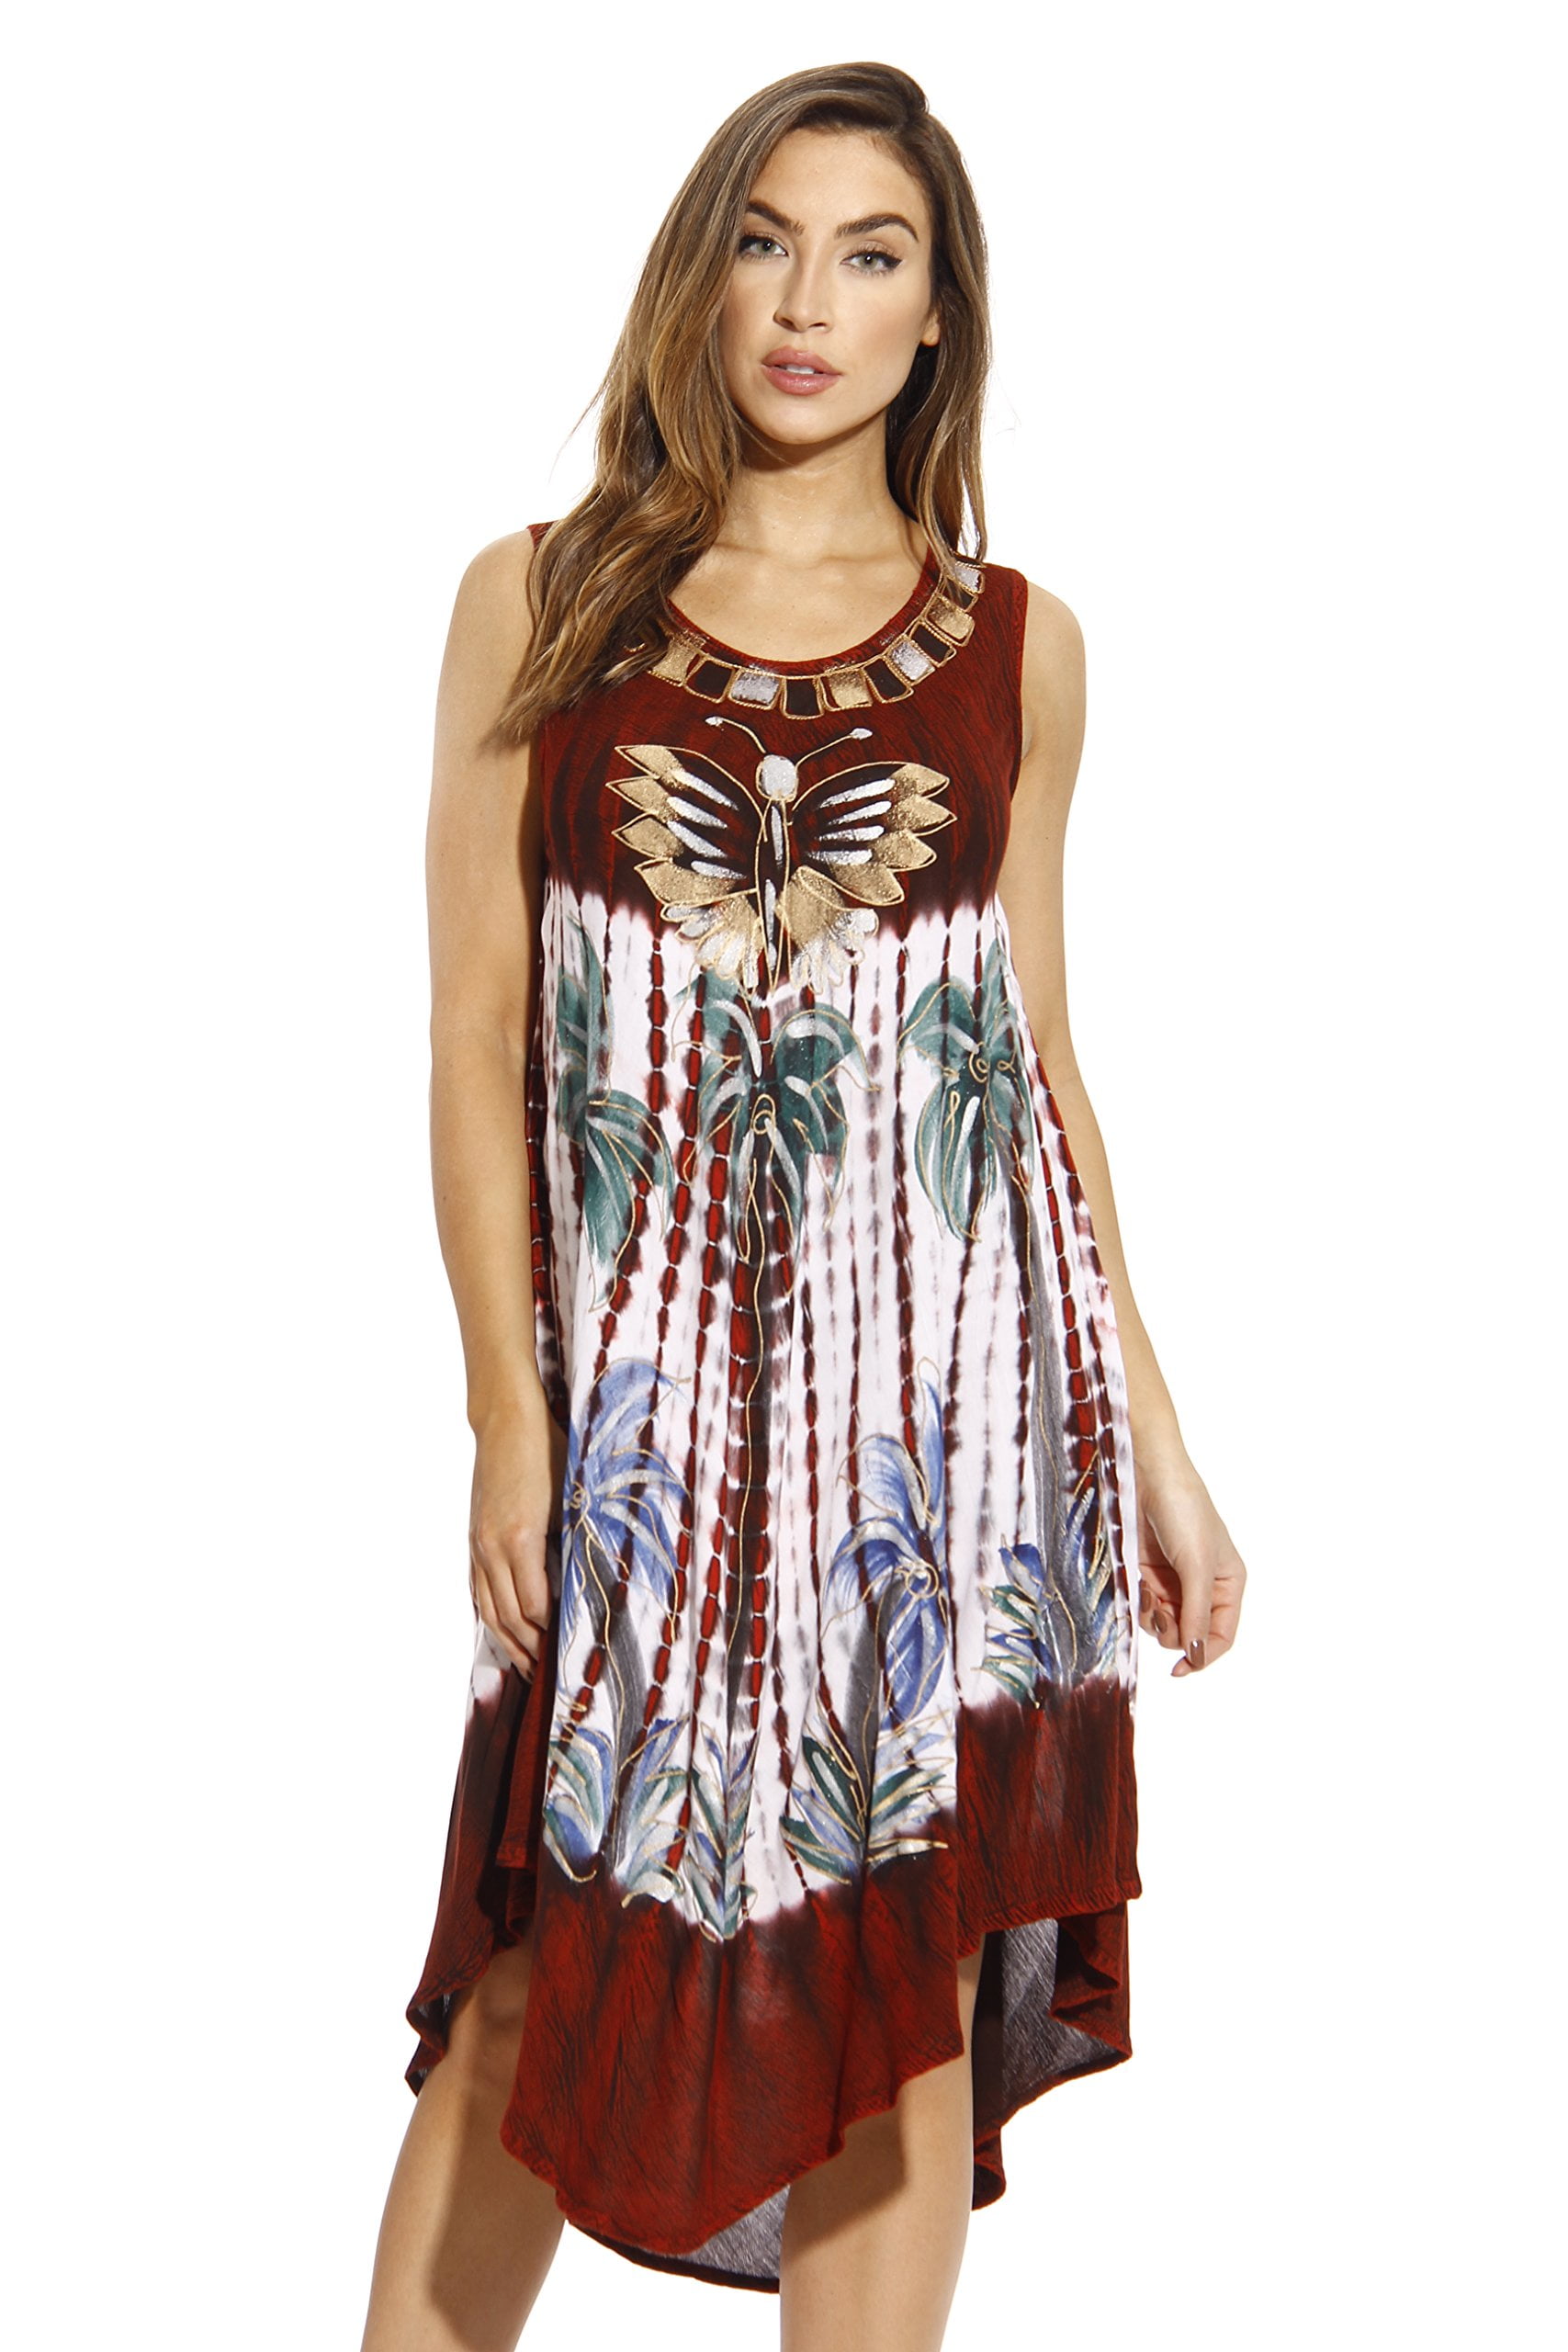 Riviera Sun Dress / Dresses for Women (Burgundy 2, Medium) - Walmart.com